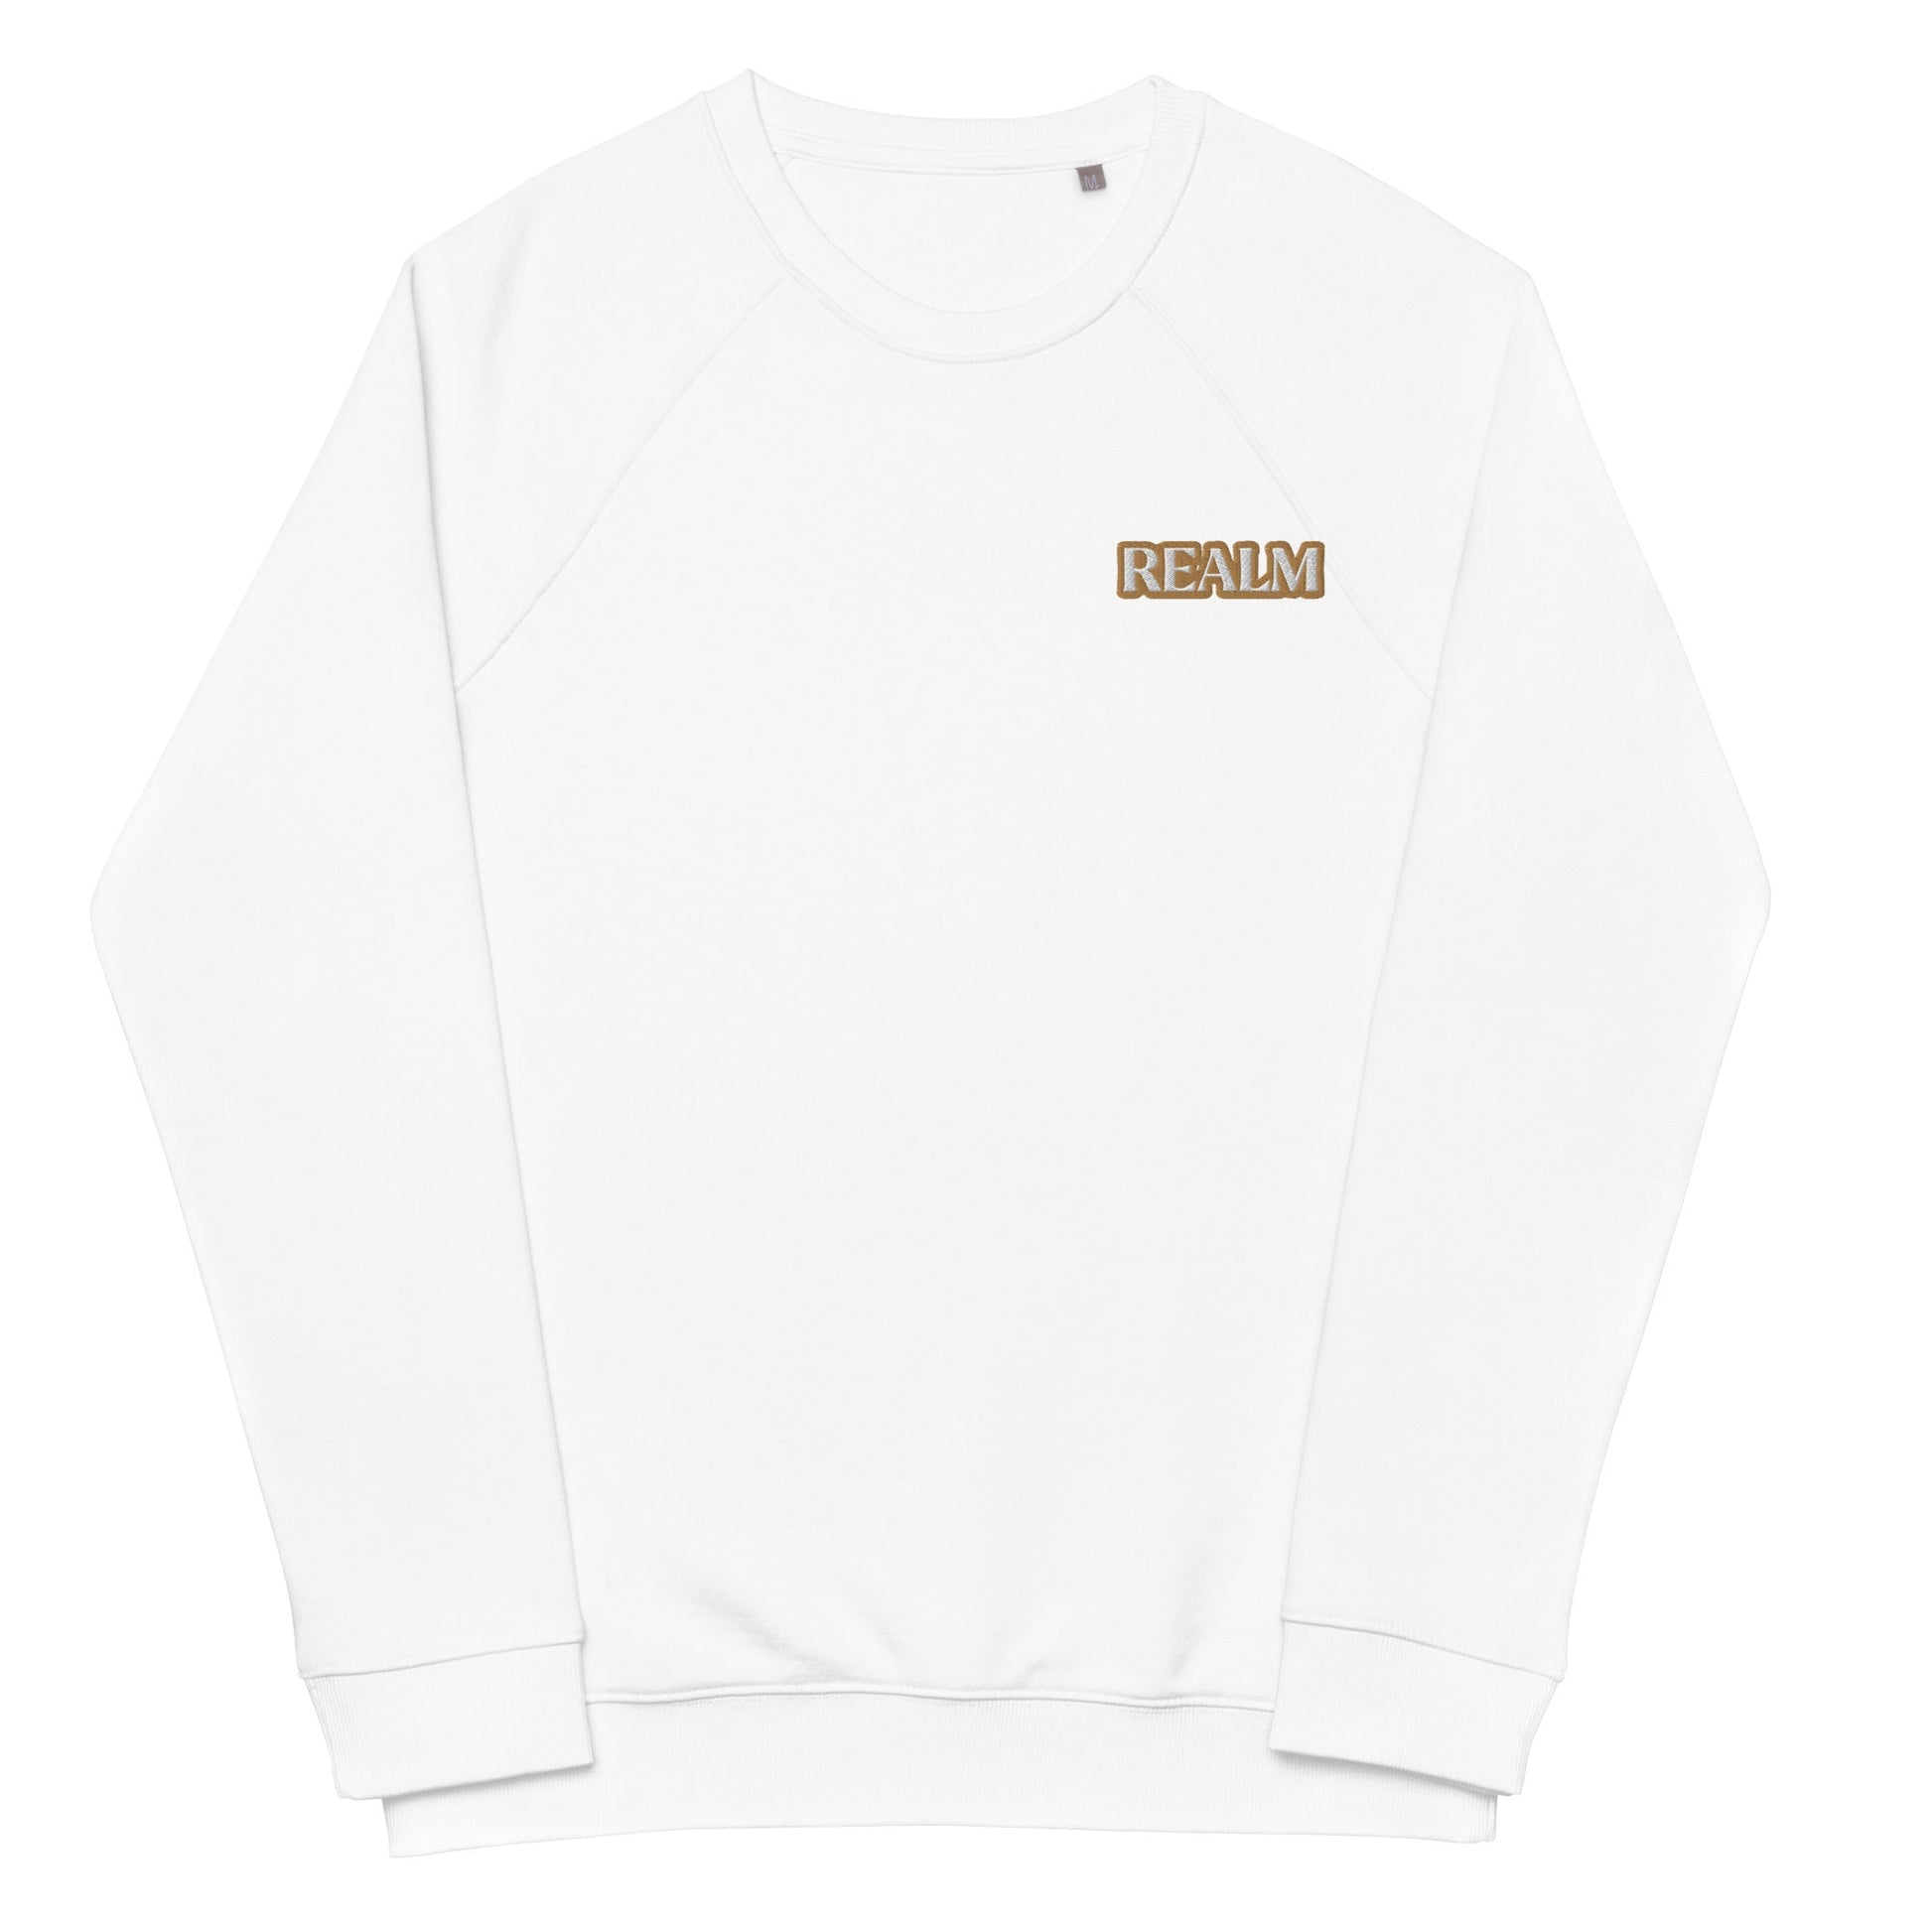 REALM | Unisex Organic Sweatshirt - Realm Concept Market